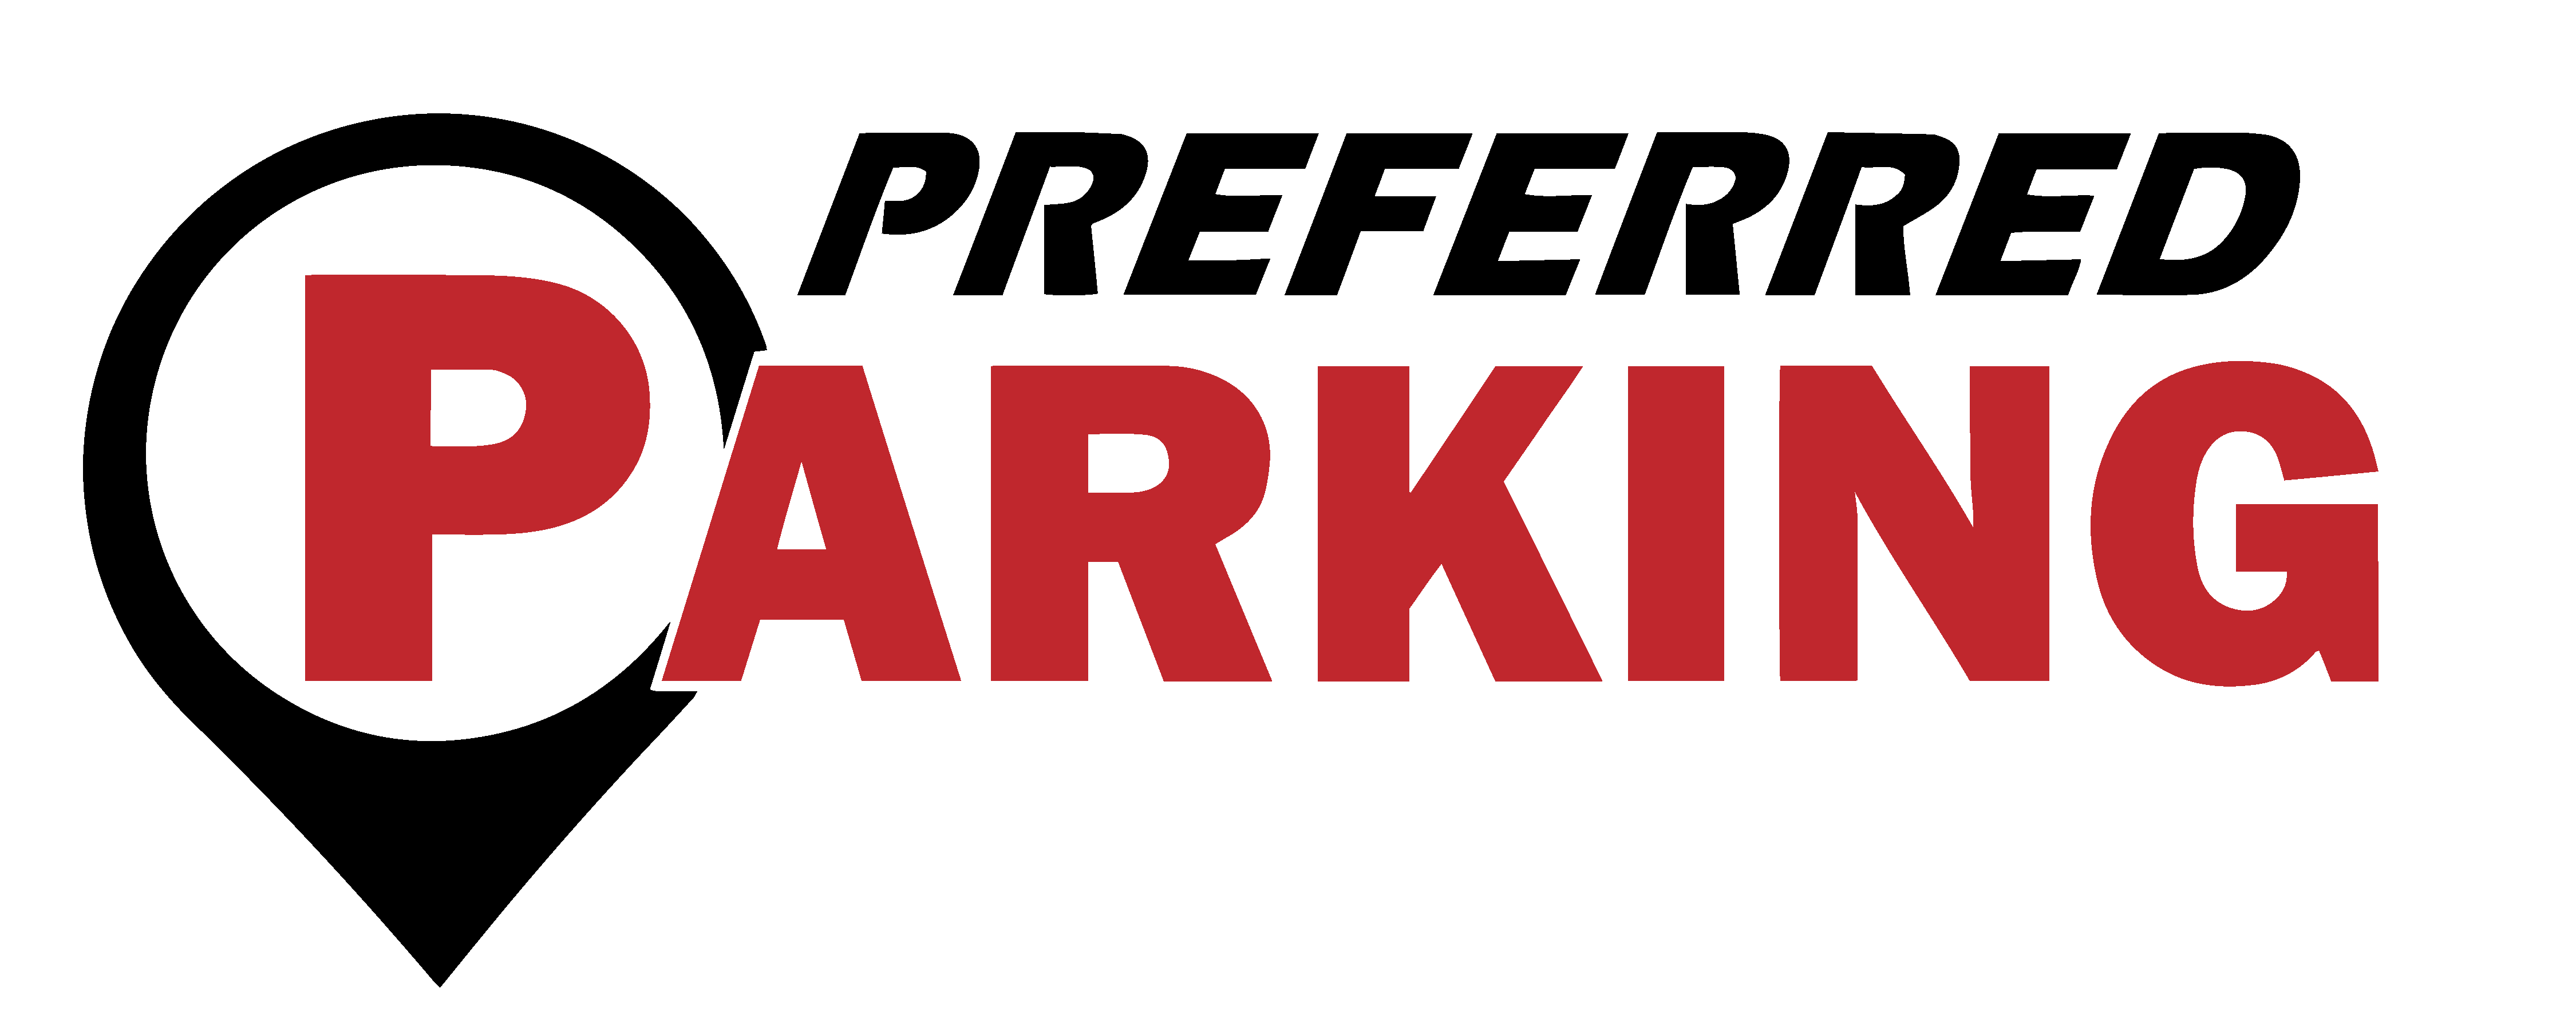 Prefered Parking Service logo